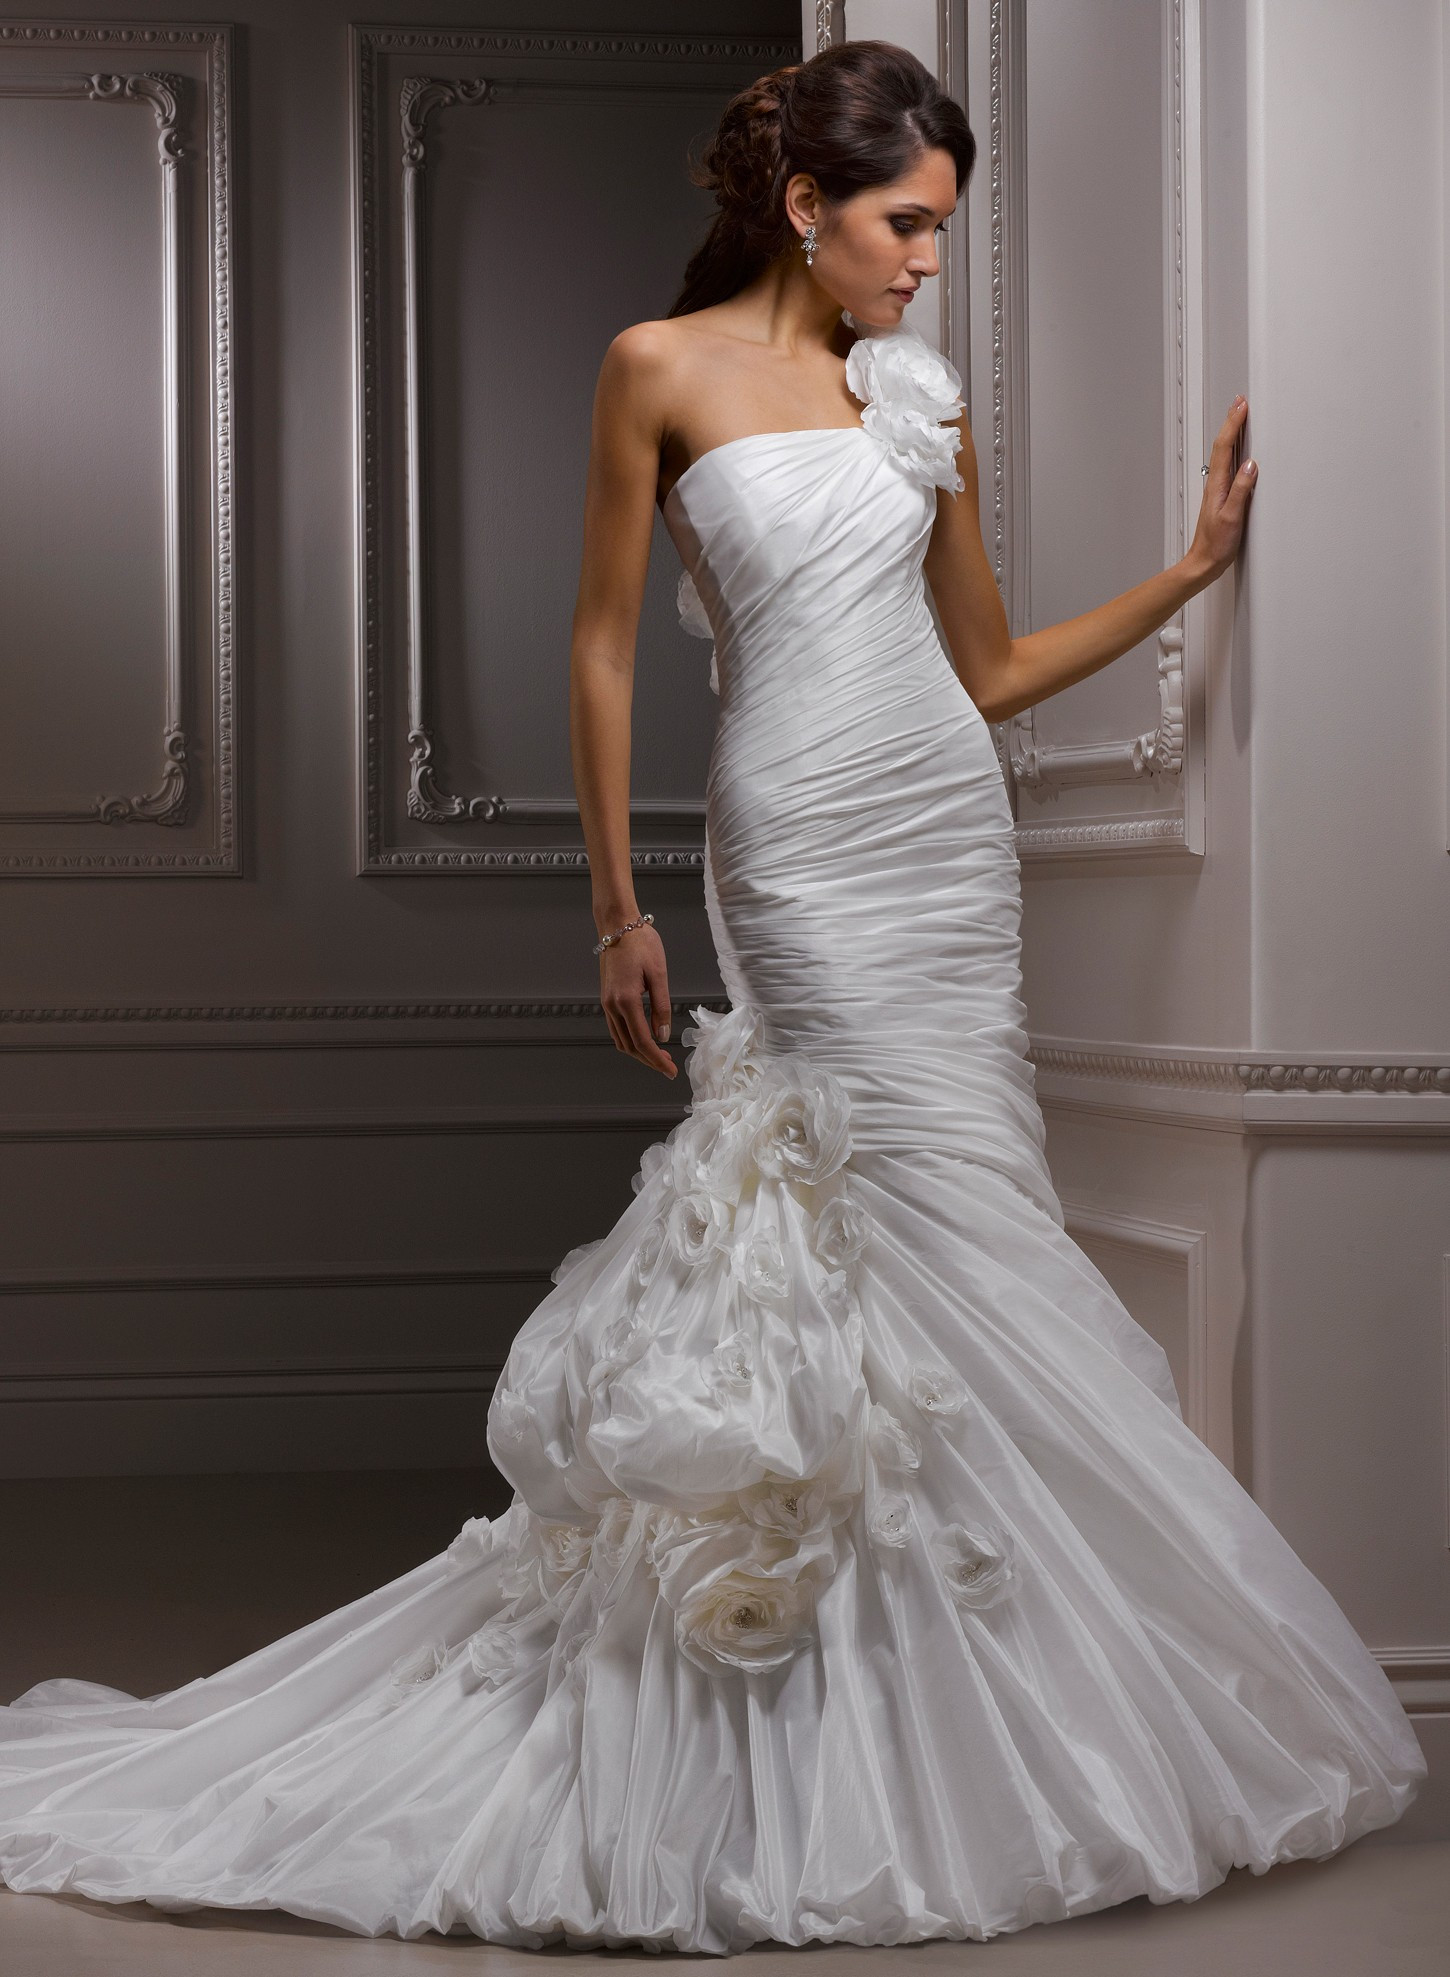 Strapless Mermaid Wedding Dresses
 Mermaid Wedding Dresses – An Elegant Choice For Brides